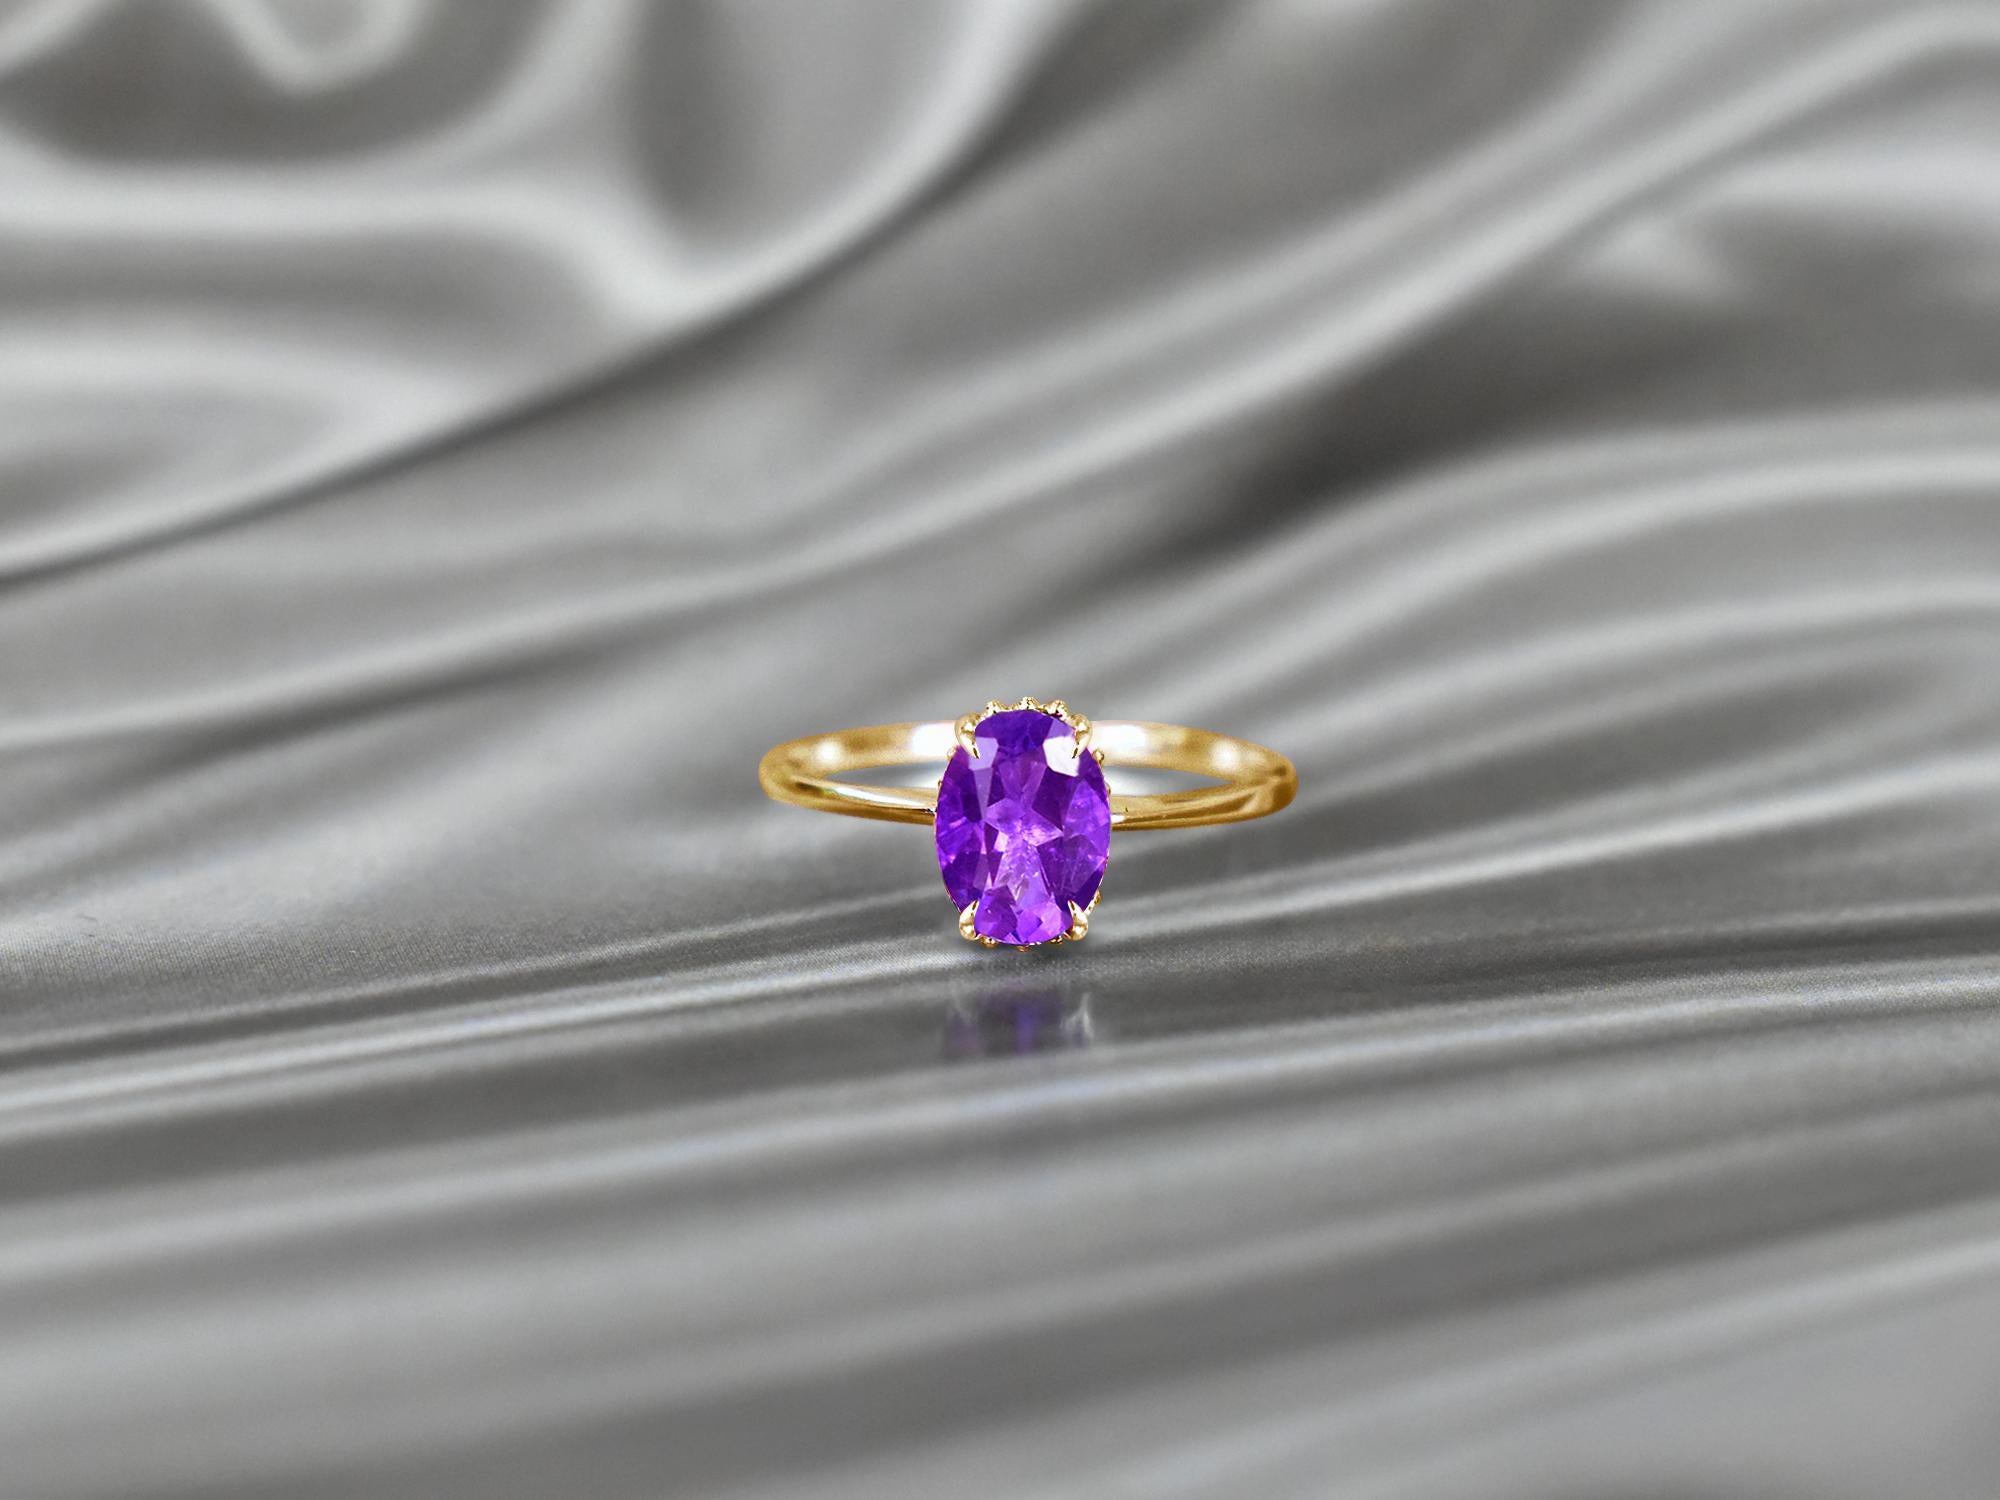 For Sale:  10k Gold Oval Gemstone 8x6 mm Oval Cut Gemstone Ring Gemstone Engagement Ring 3